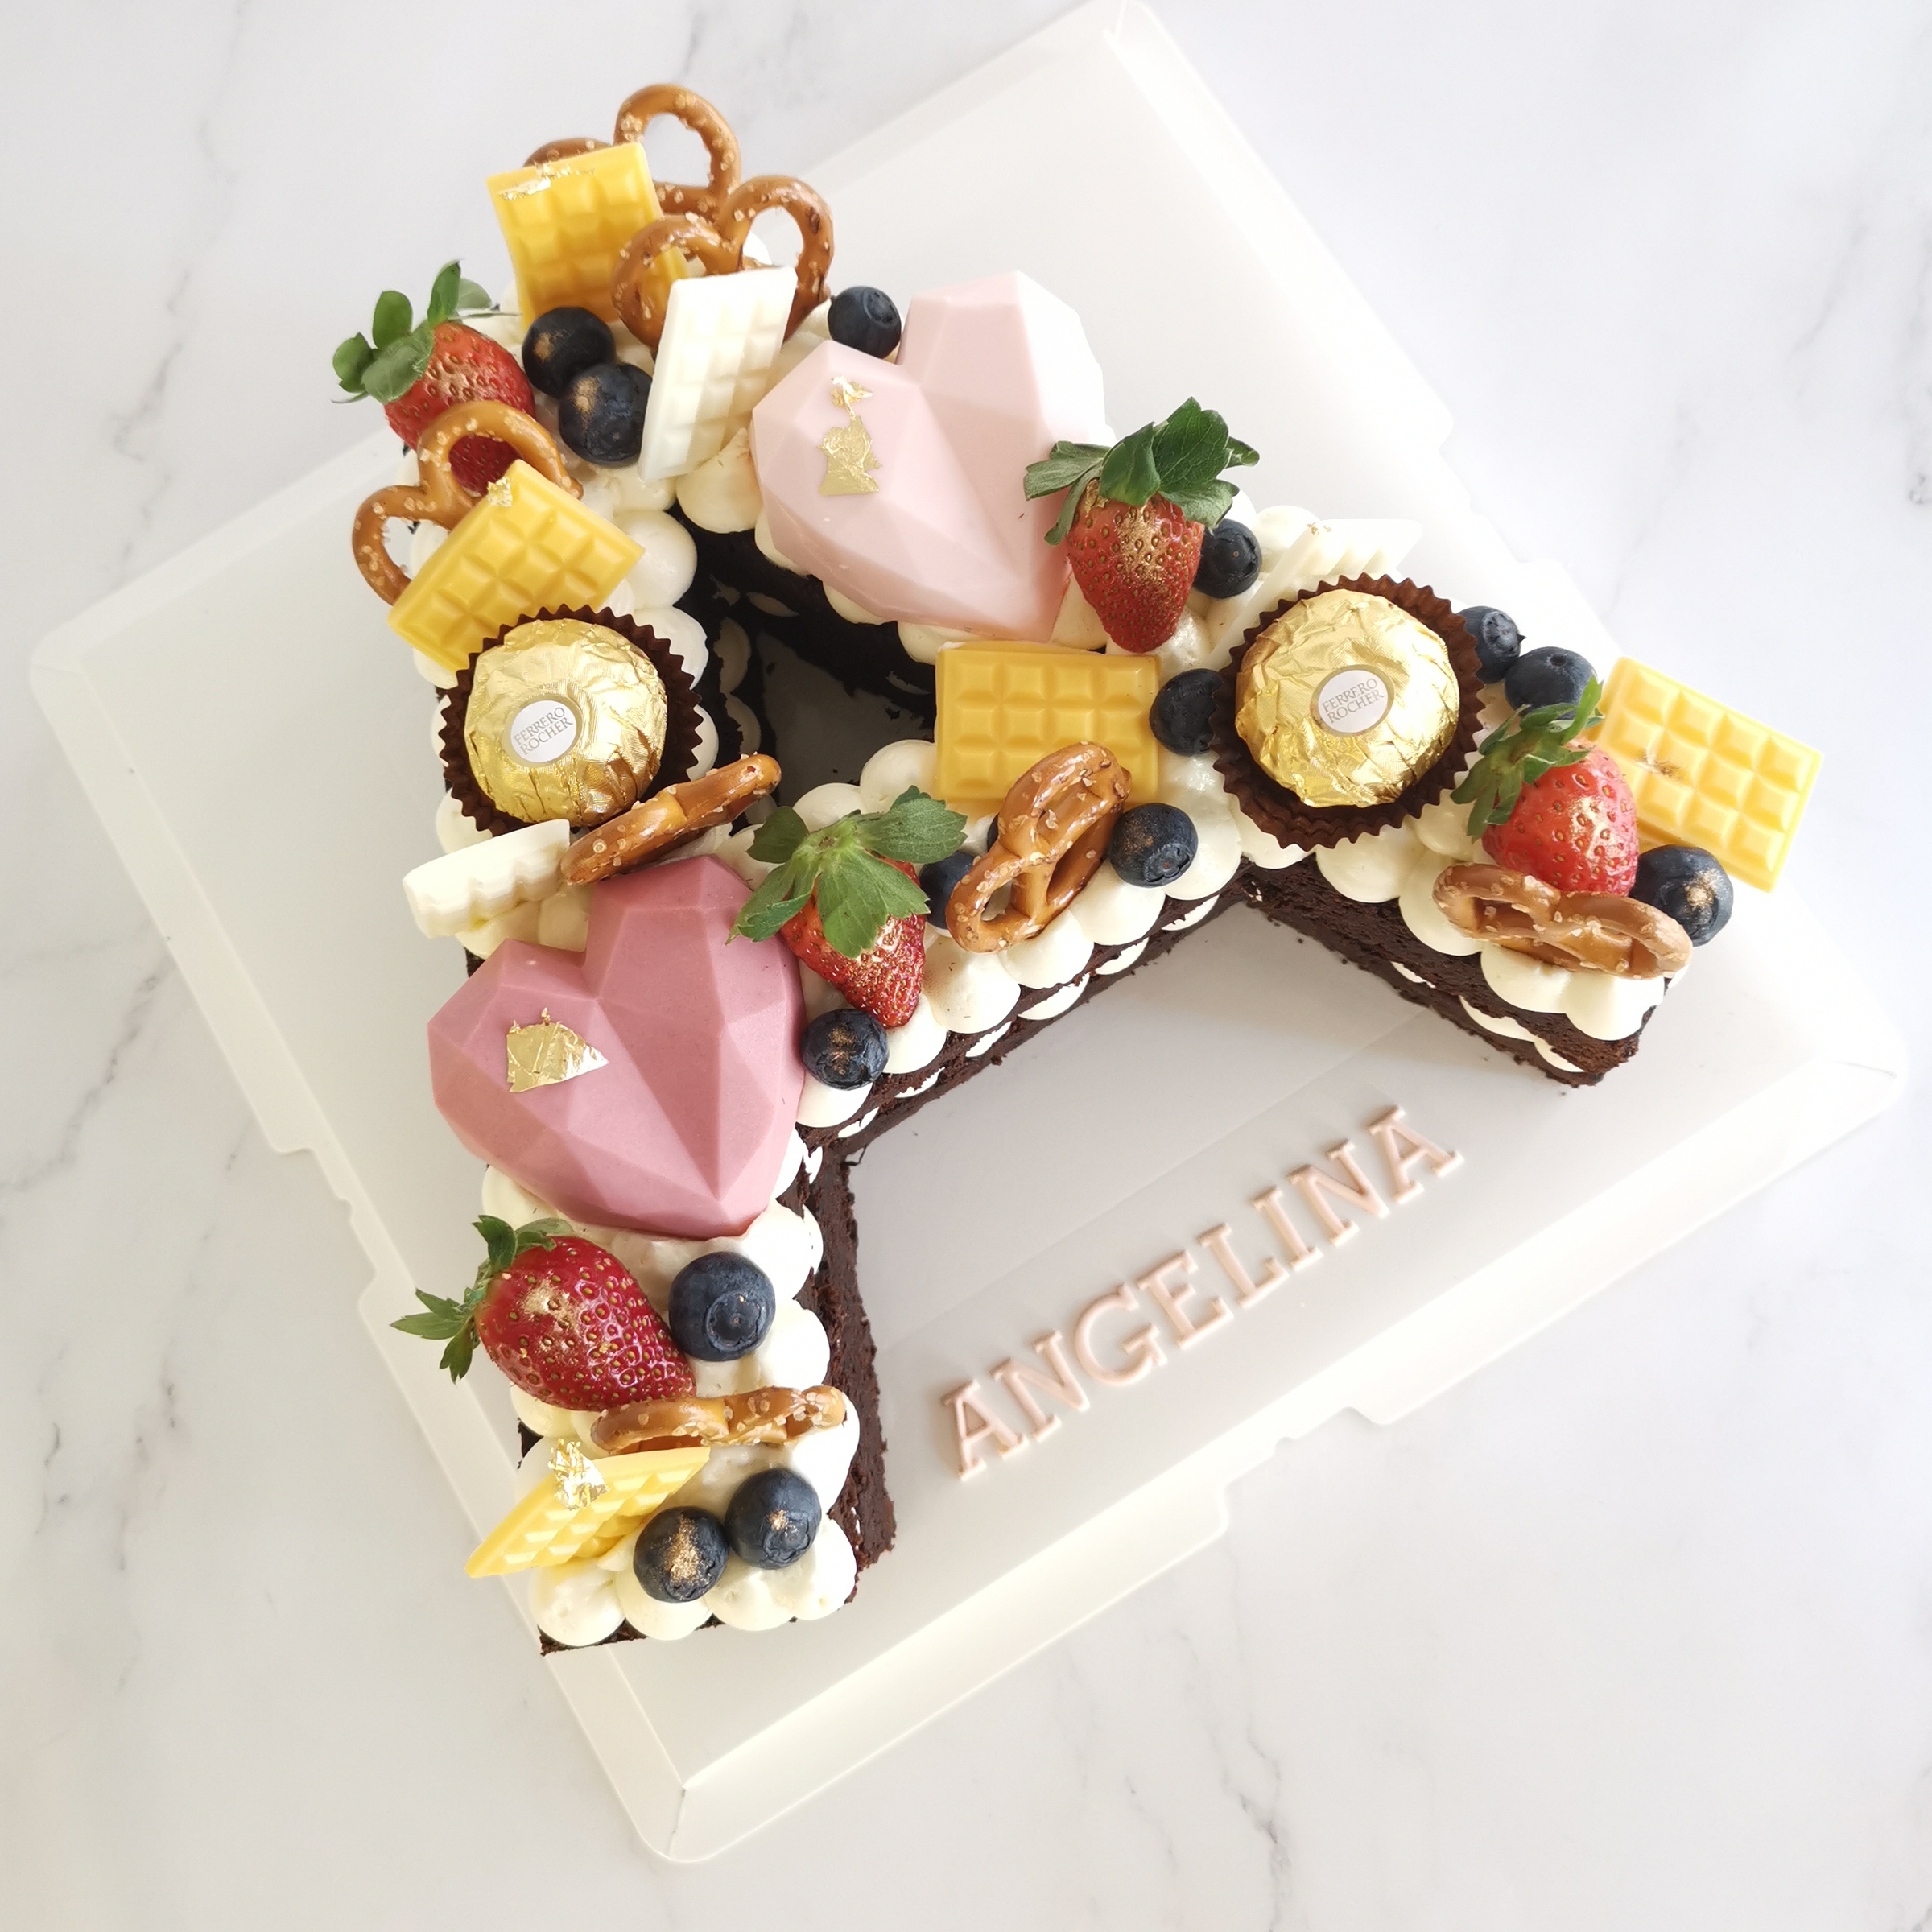 Chocolate Pâte Sablée letter tart cake – hopes.dreams.aspirations